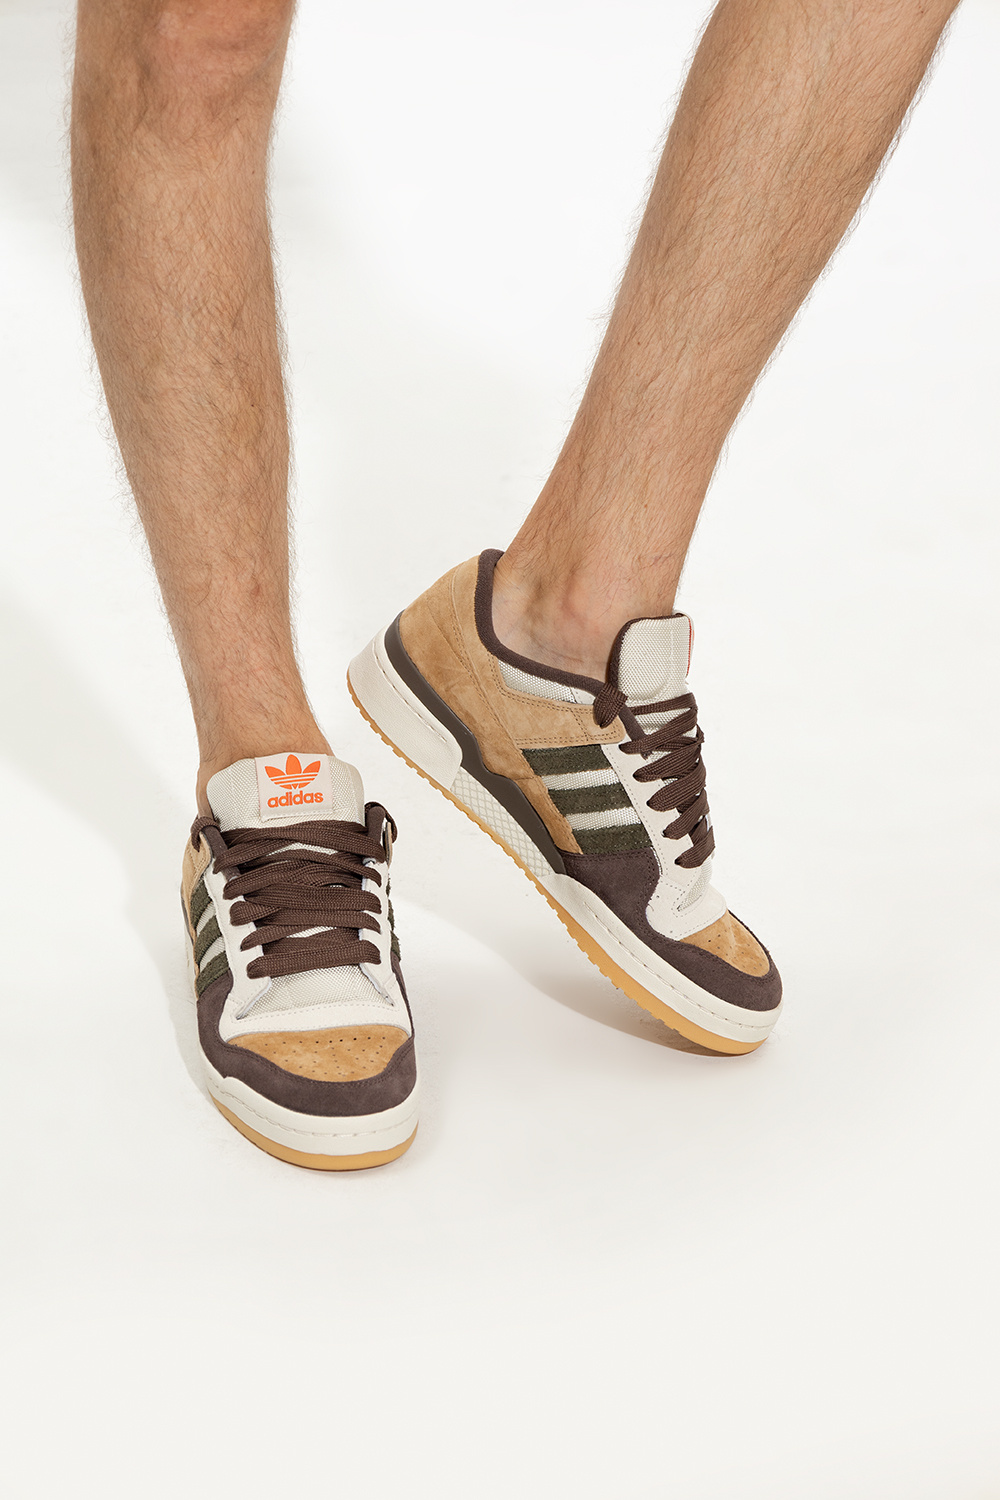 ADIDAS Originals ‘Forum 84 Low’ sneakers